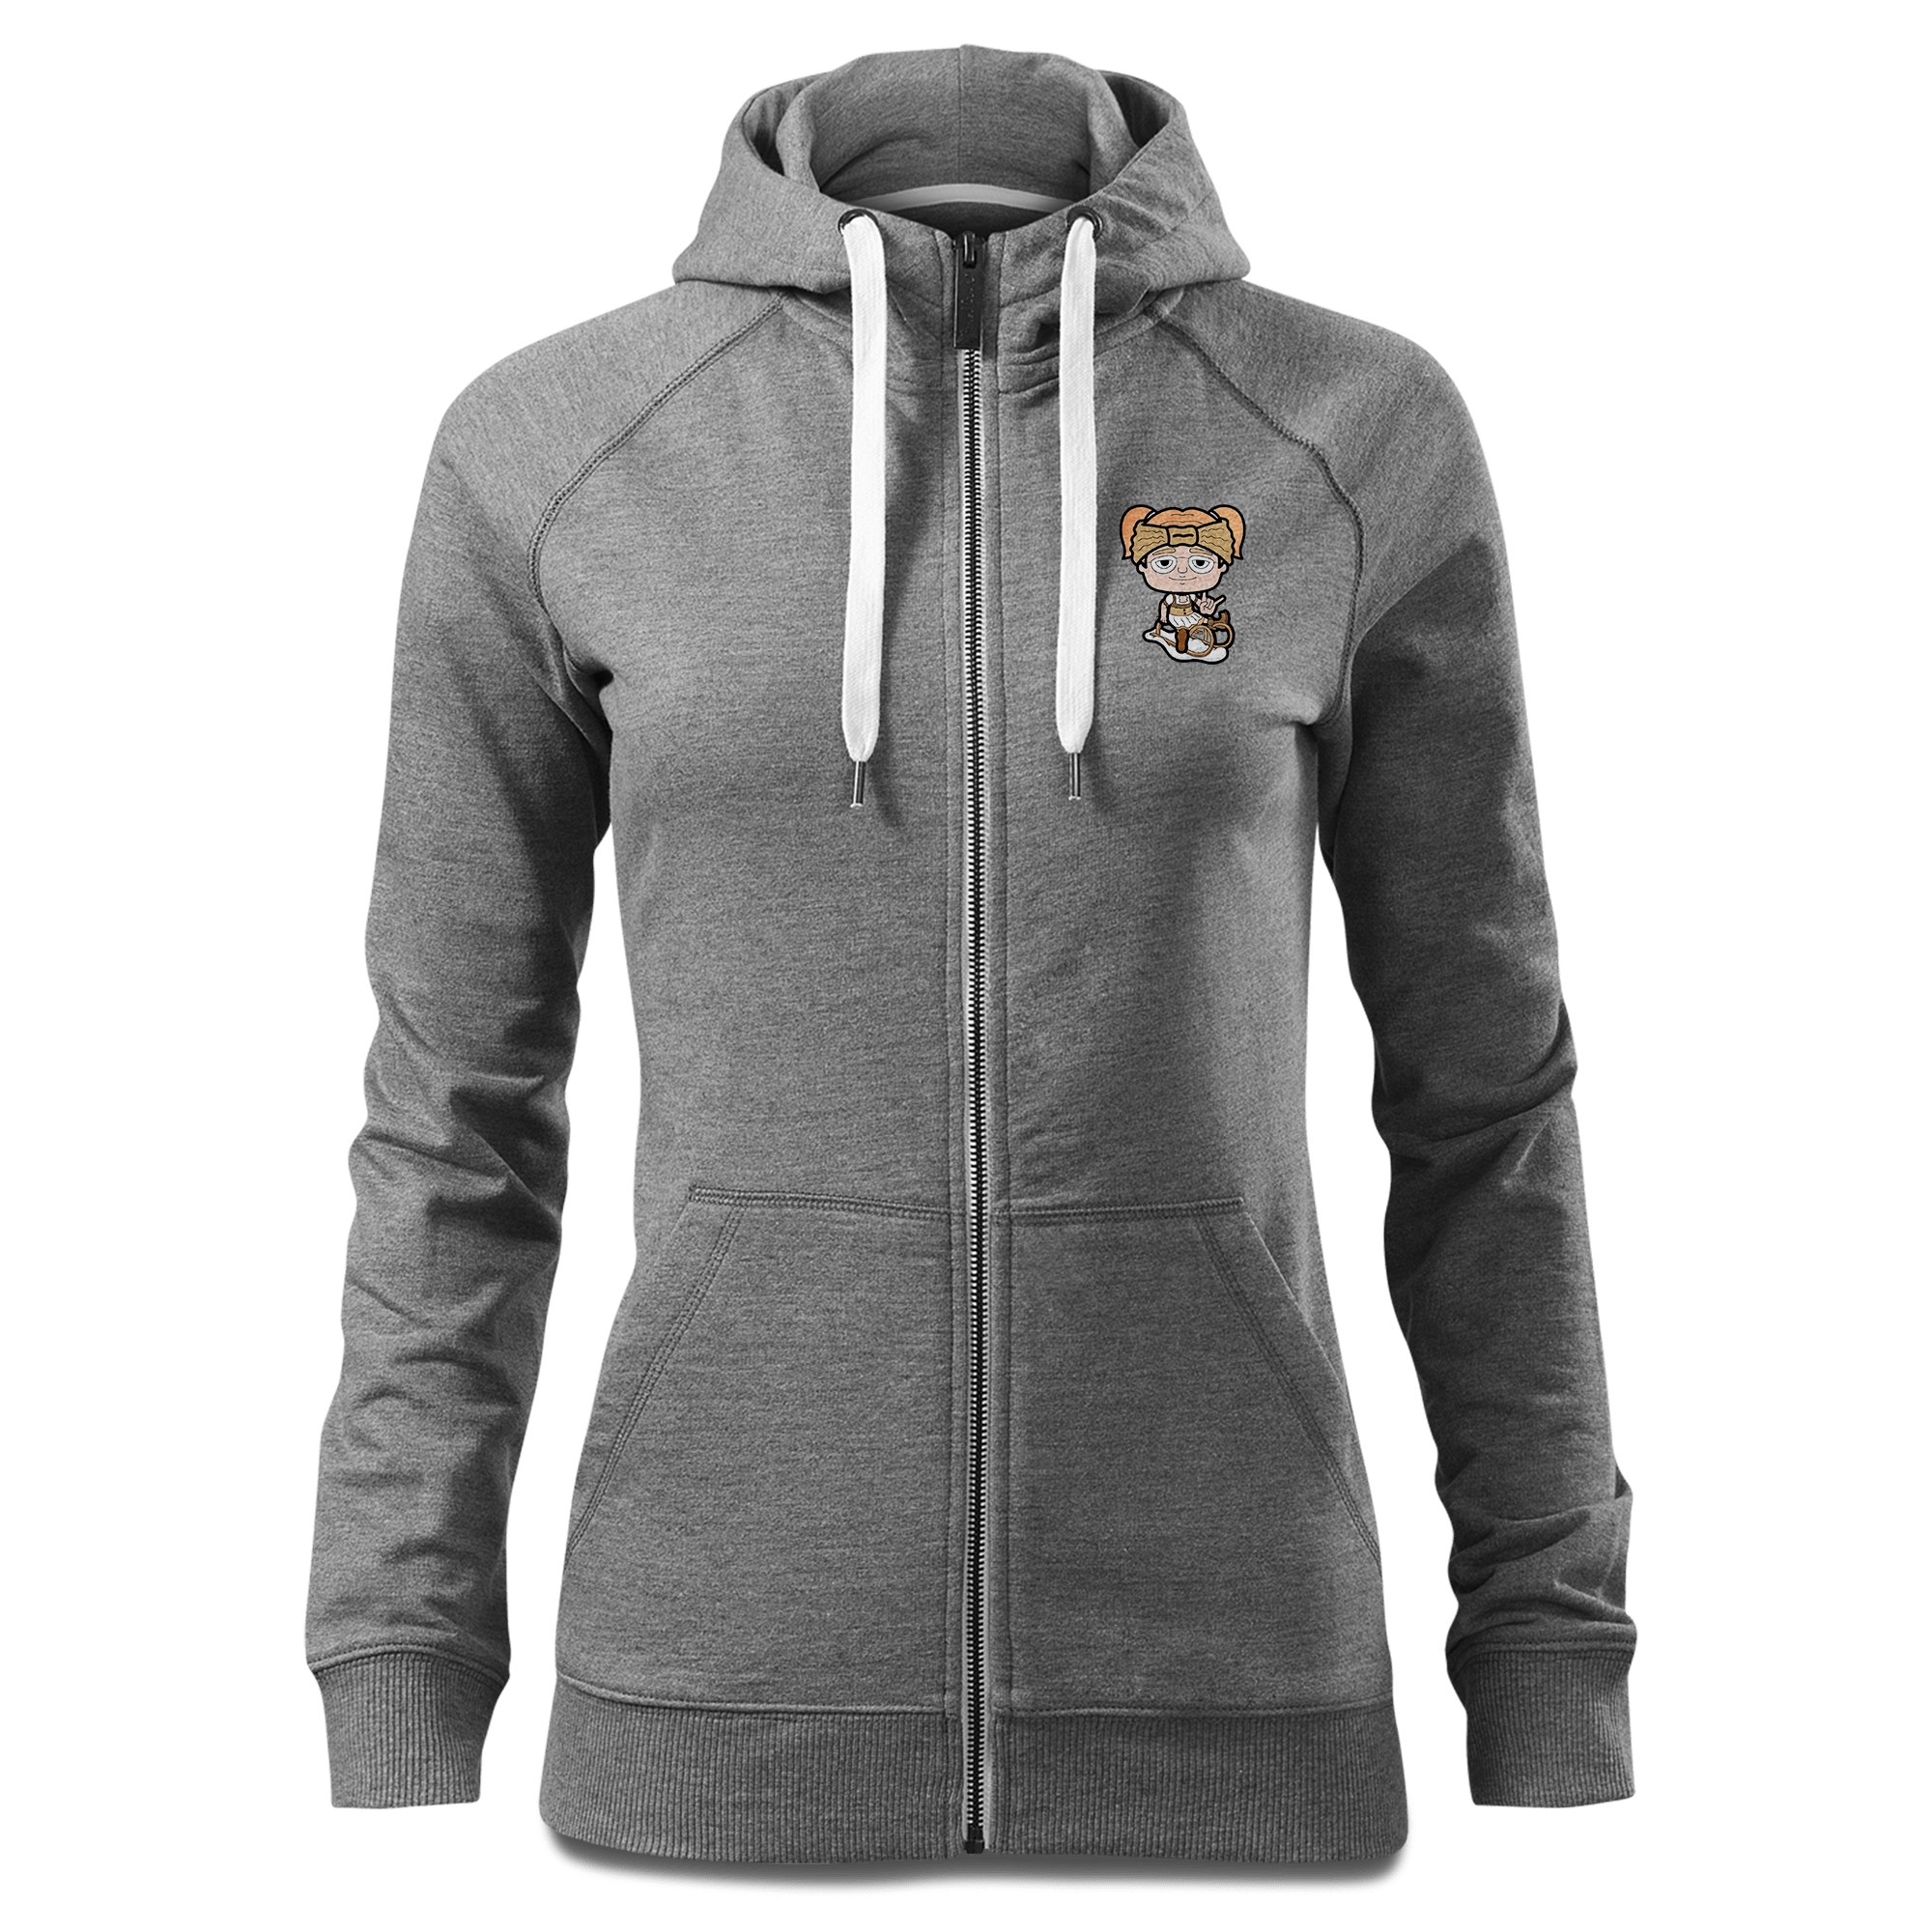 Die Jung Sinzerin Winter Edition Sweatshirt Zip Hoody Damen Grau Meliert Kreut Front